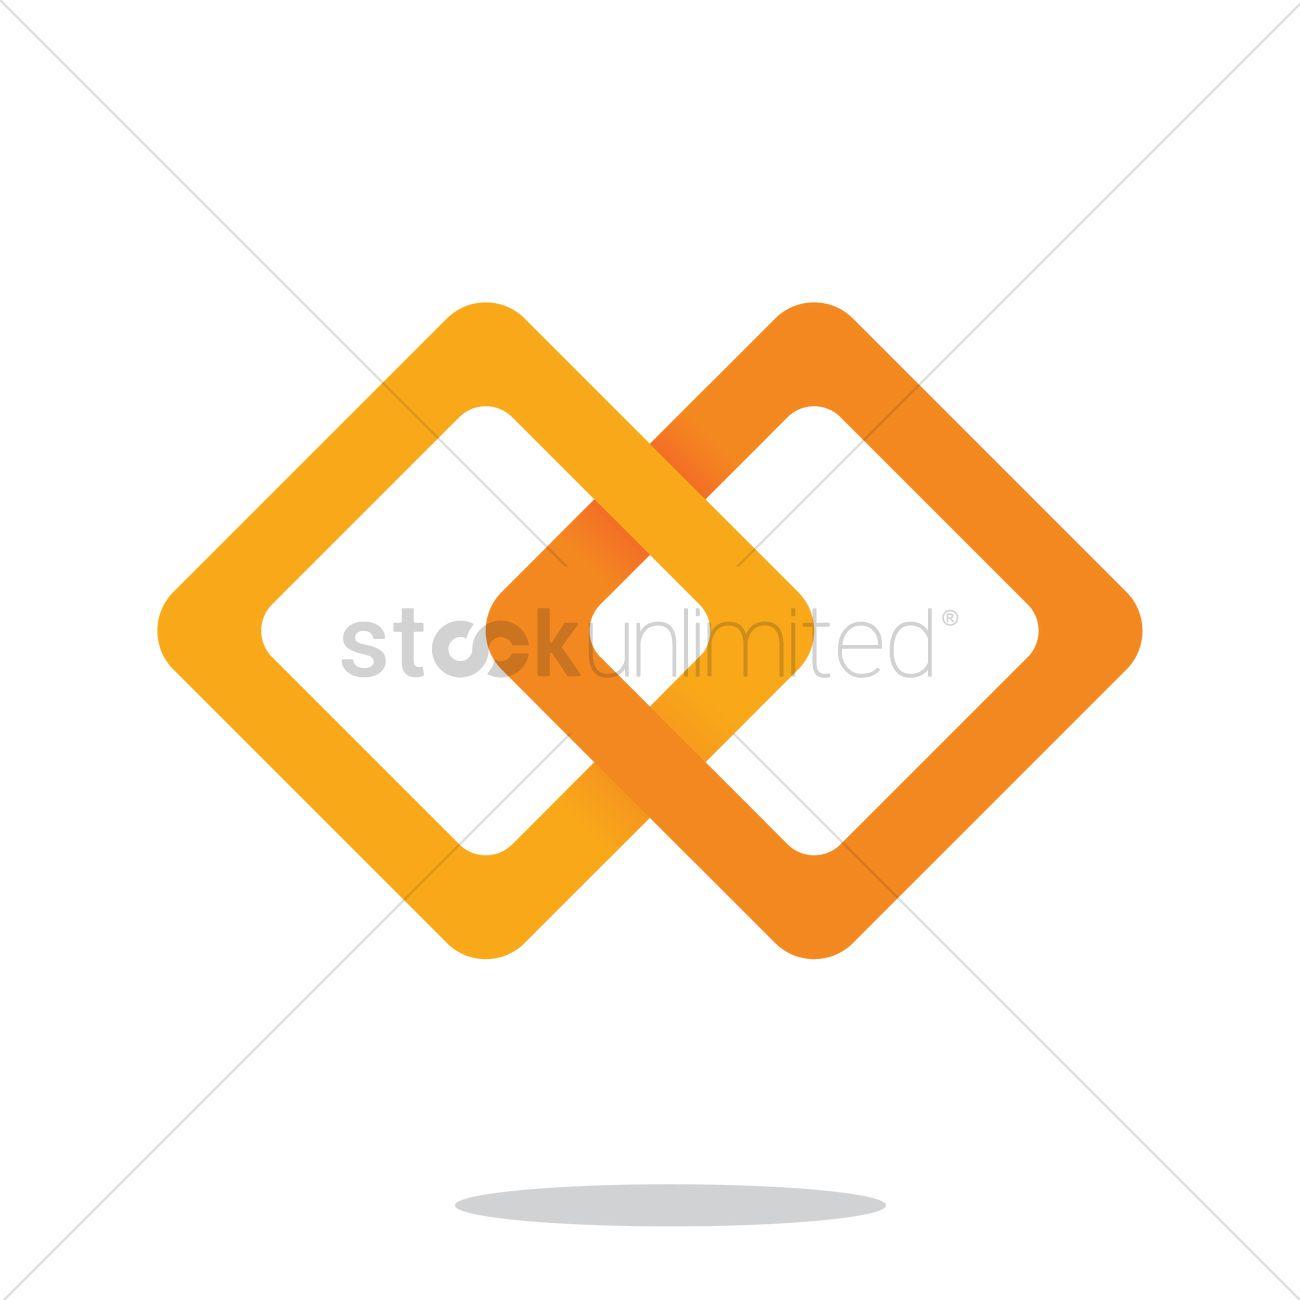 Rhombus Logo - Rhombus logo element Vector Image - 1628227 | StockUnlimited